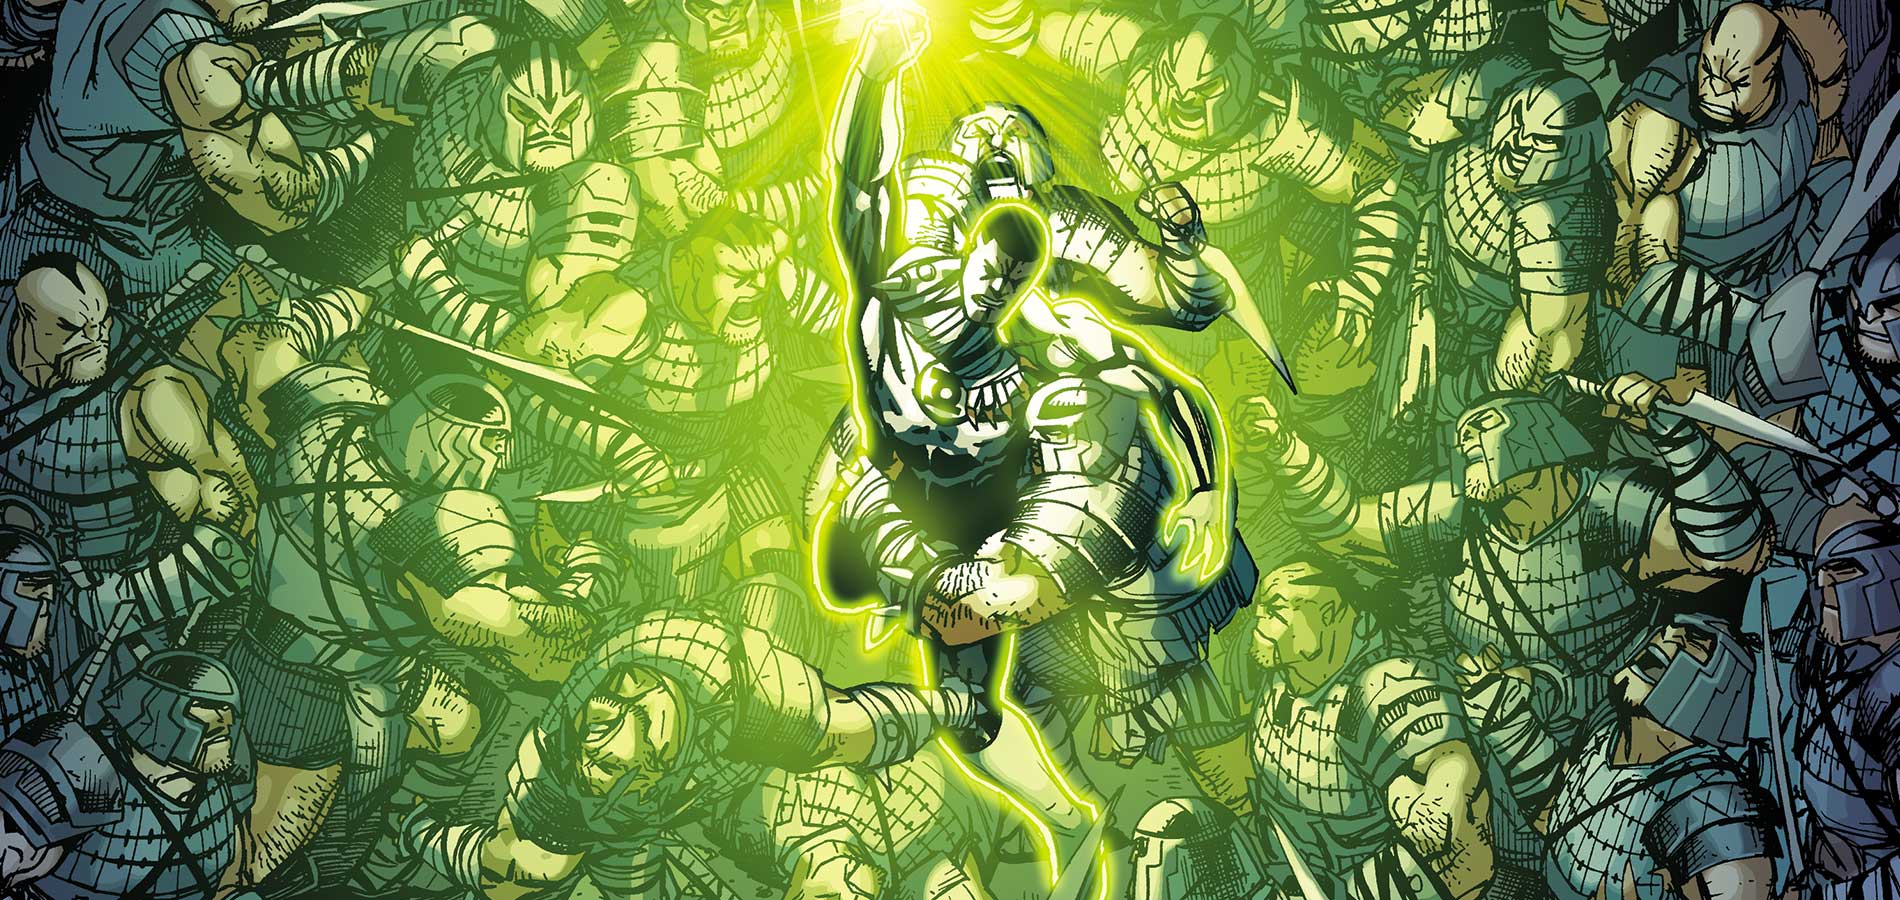 Green Lantern Corps
image Orange Lantern Corps Wallpaper - Dc Comics Green Lantern Insurreccion - HD Wallpaper 